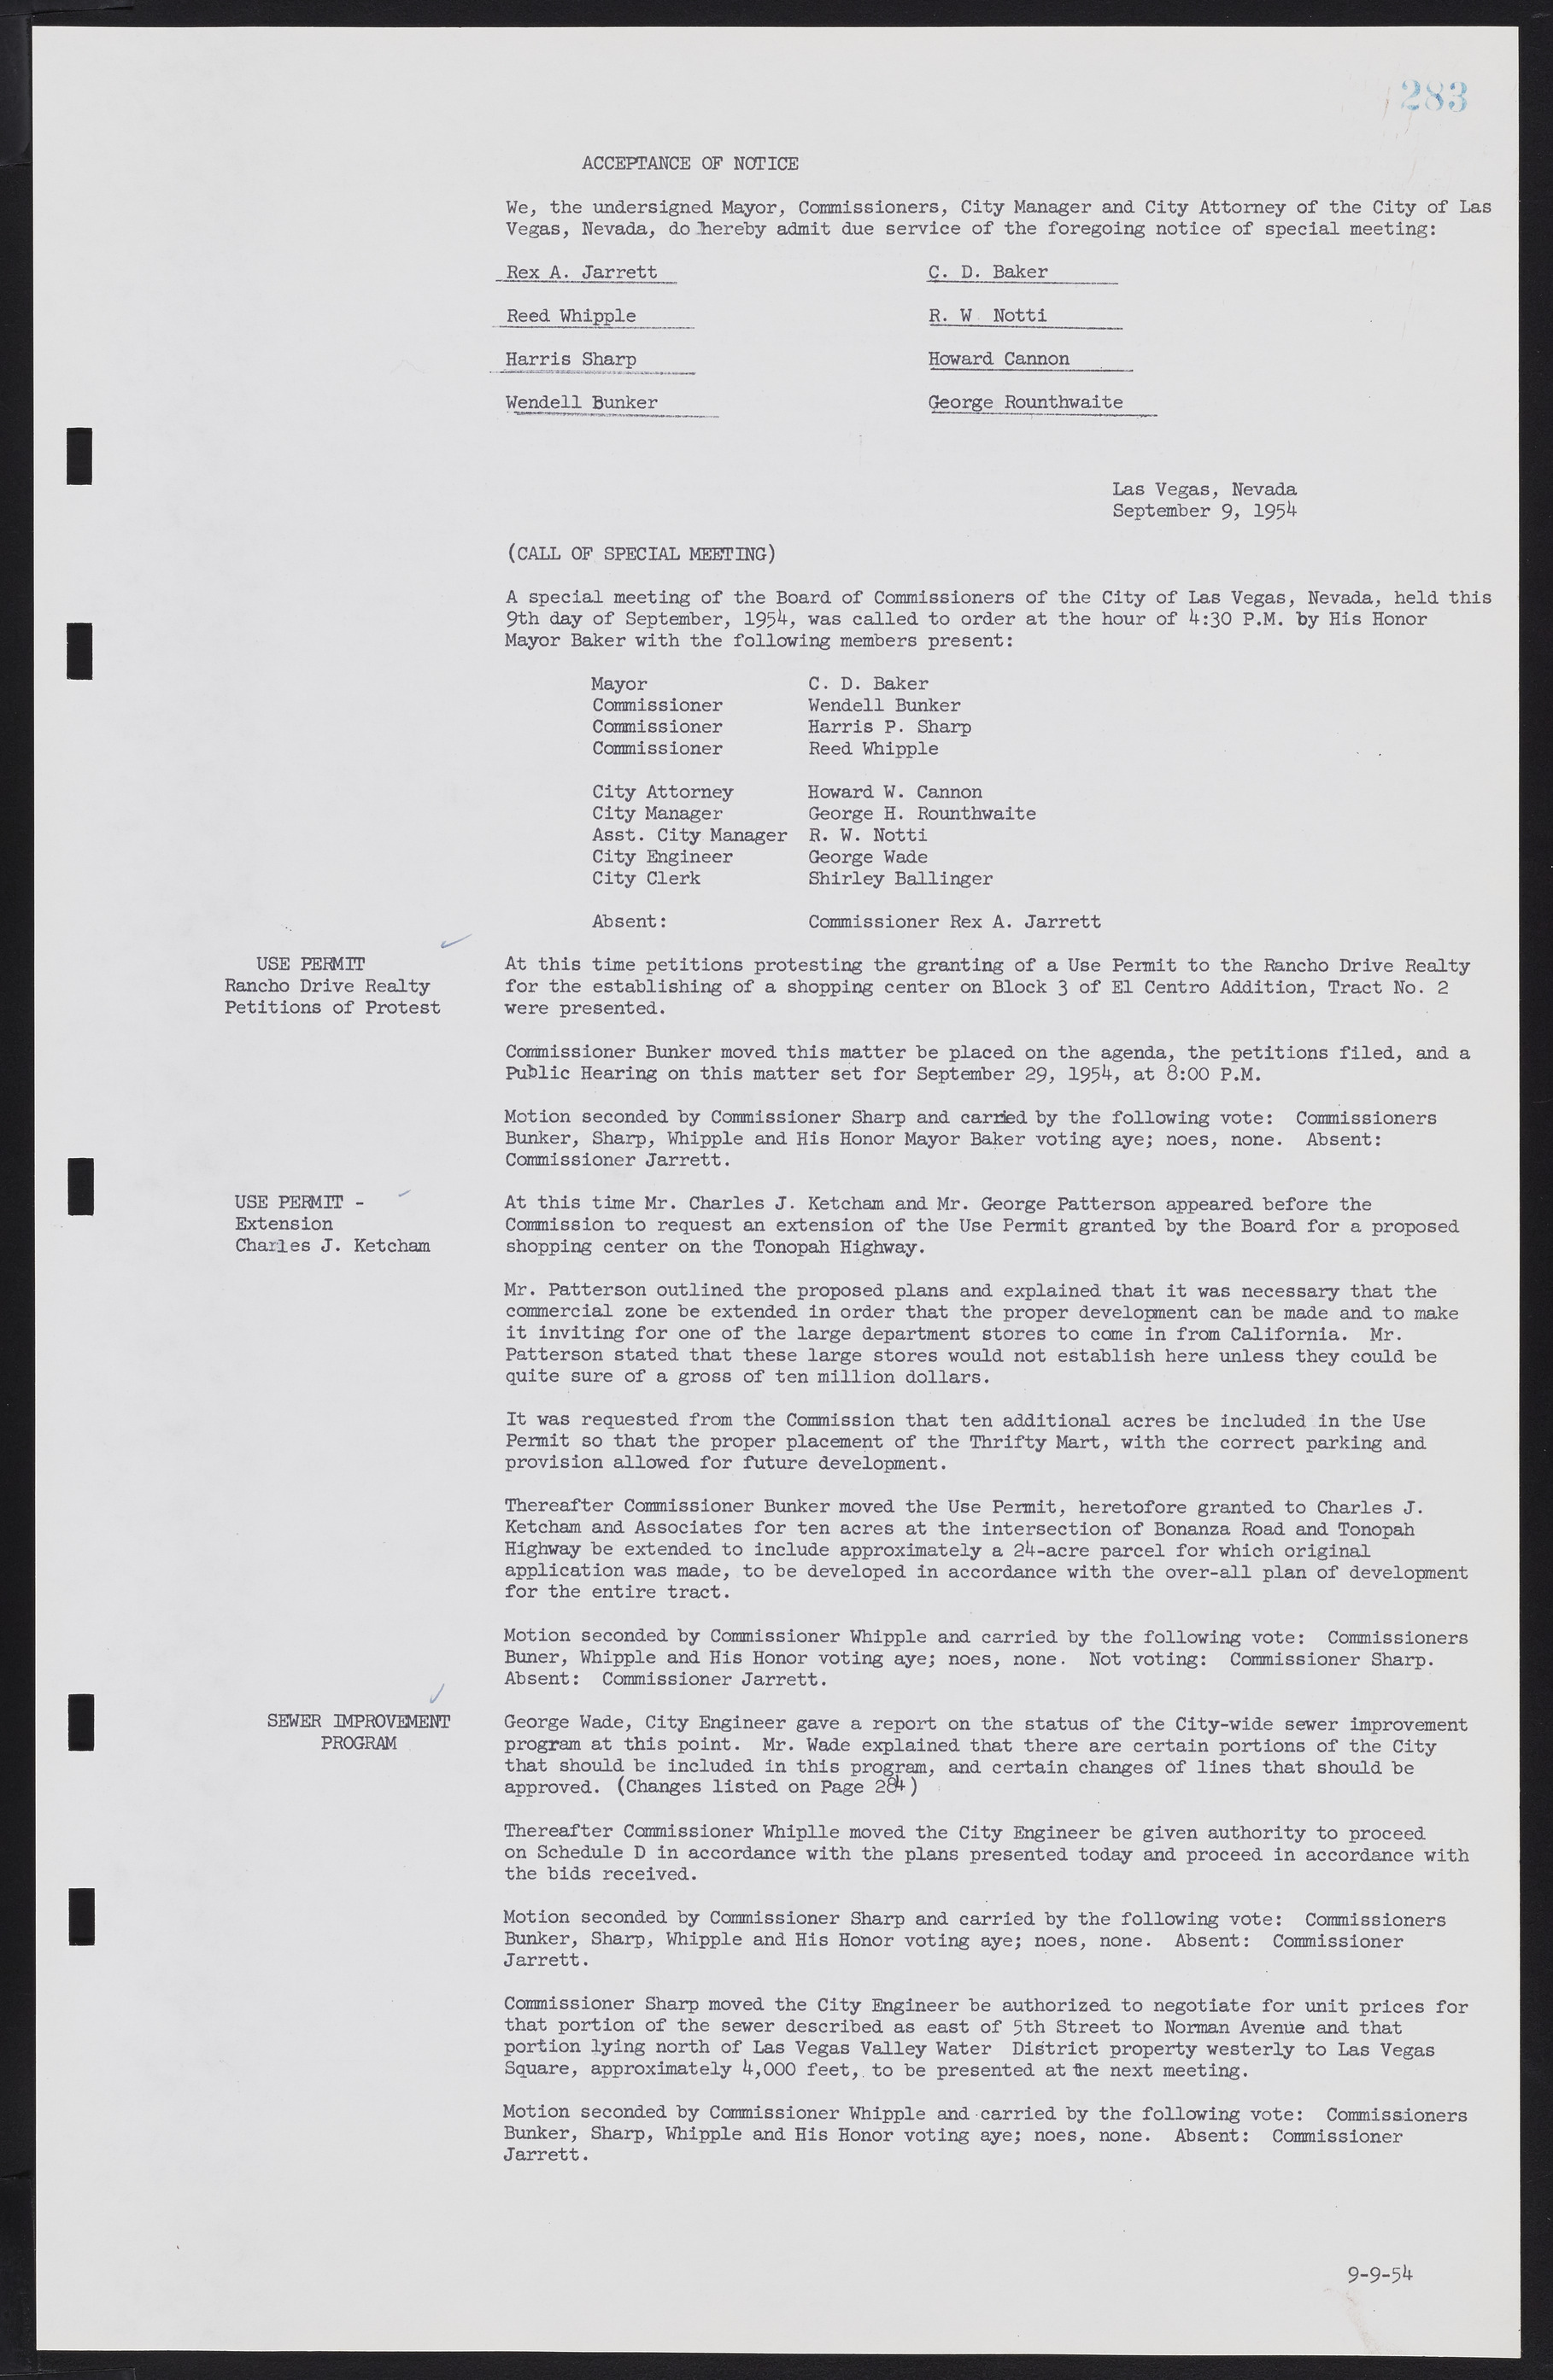 Las Vegas City Commission Minutes, February 17, 1954 to September 21, 1955, lvc000009-289